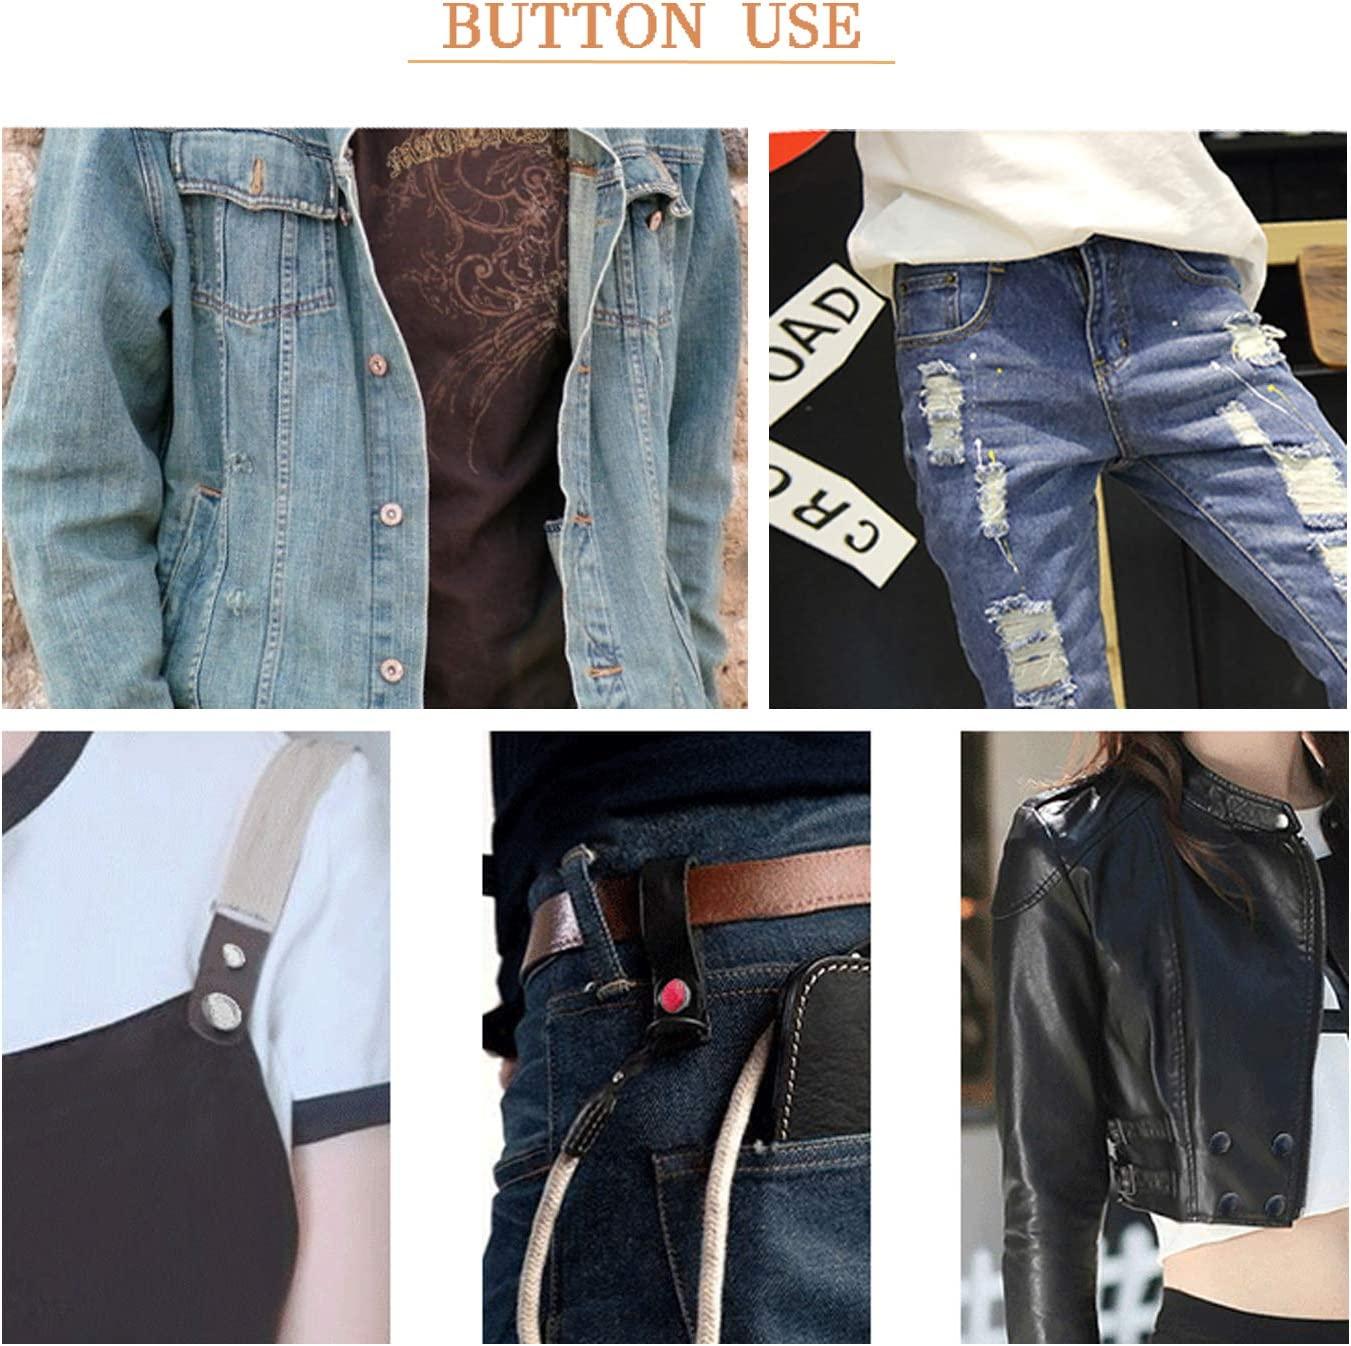 6 Pcs Buttons for Jeans,Adjustable Jean Button Pins,Pant Waist